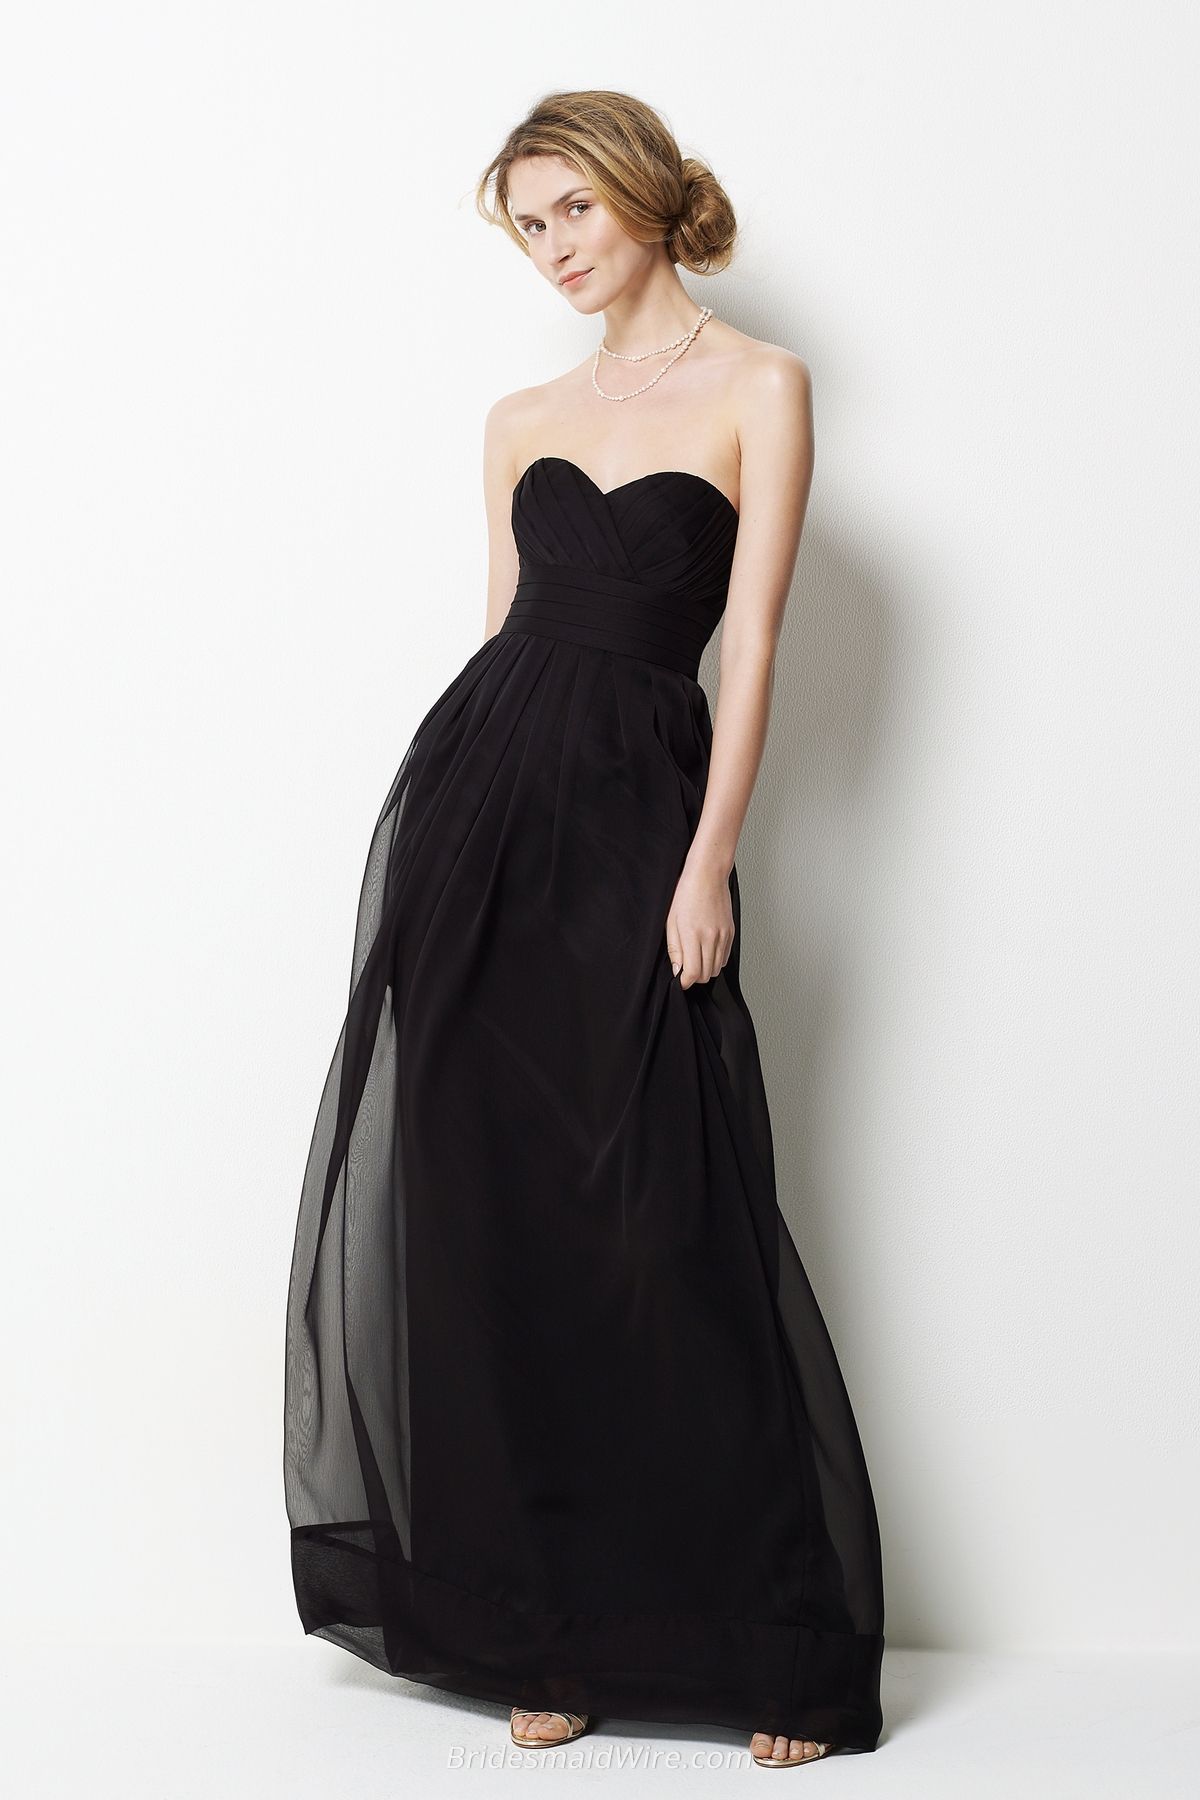 Chiffon Floor Length Bridesmaid Dresses : Clothing Brand Reviews